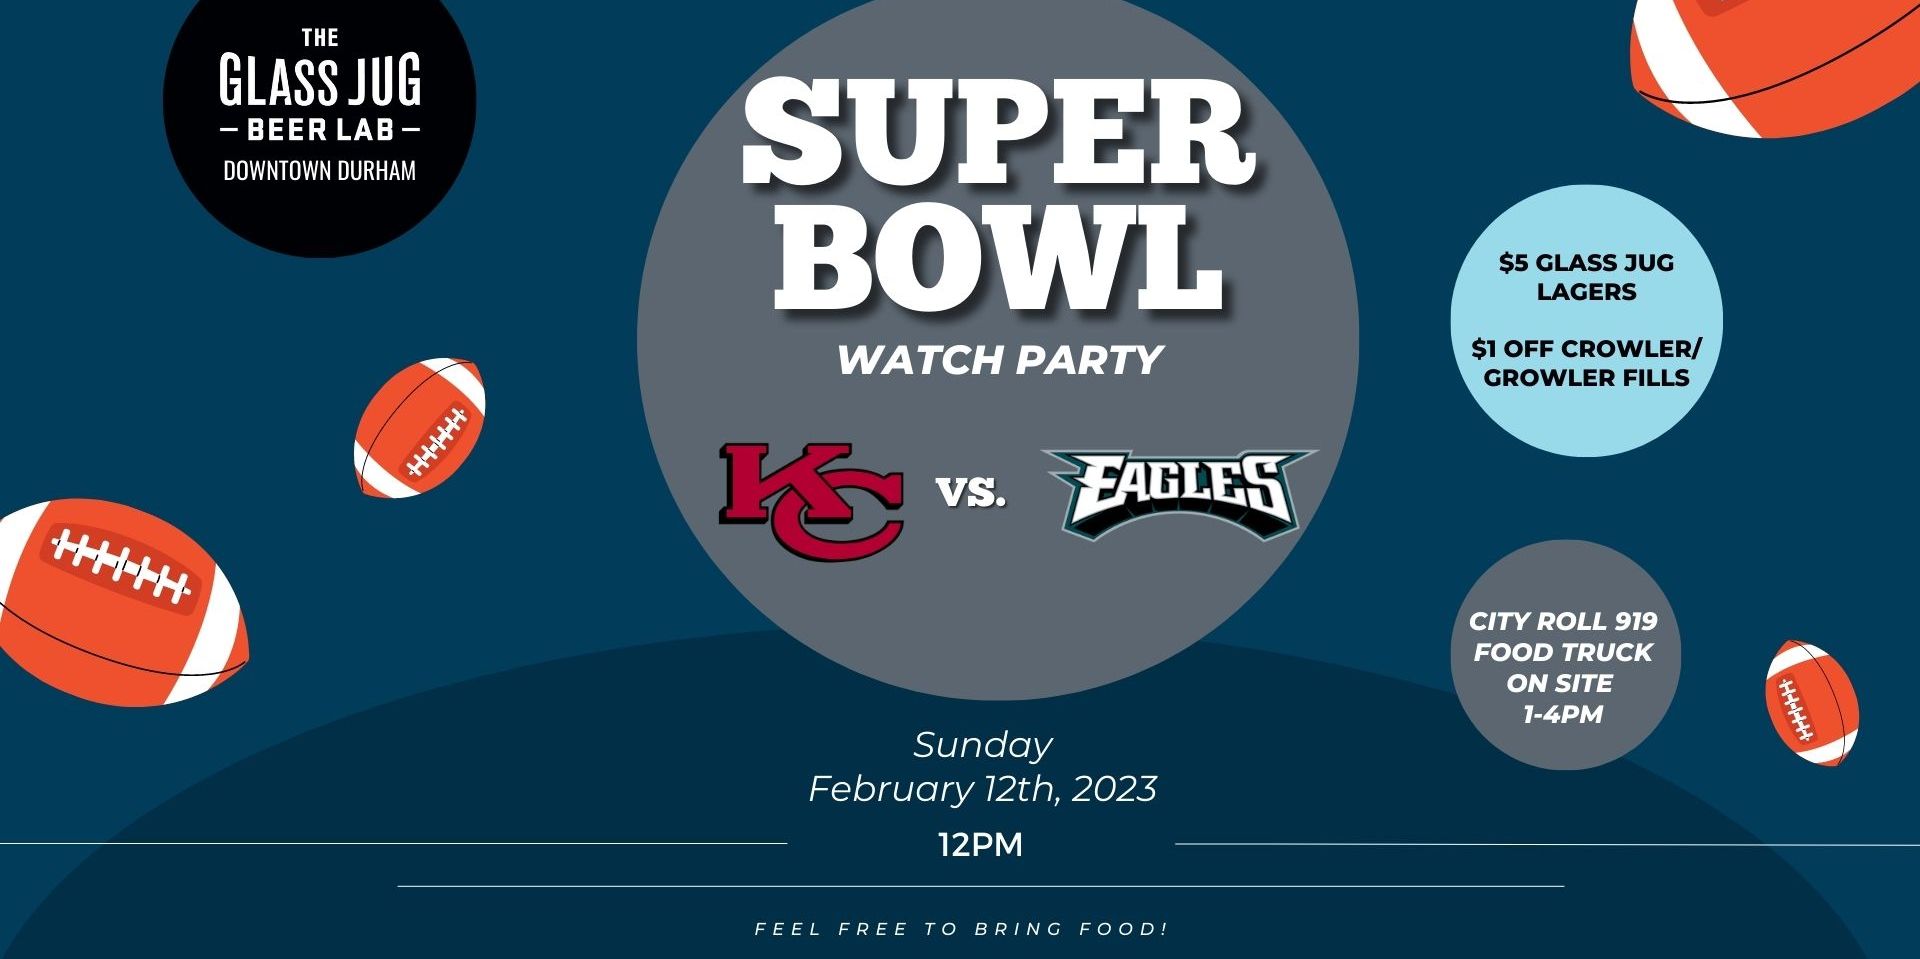 Super Bowl Party promotional image